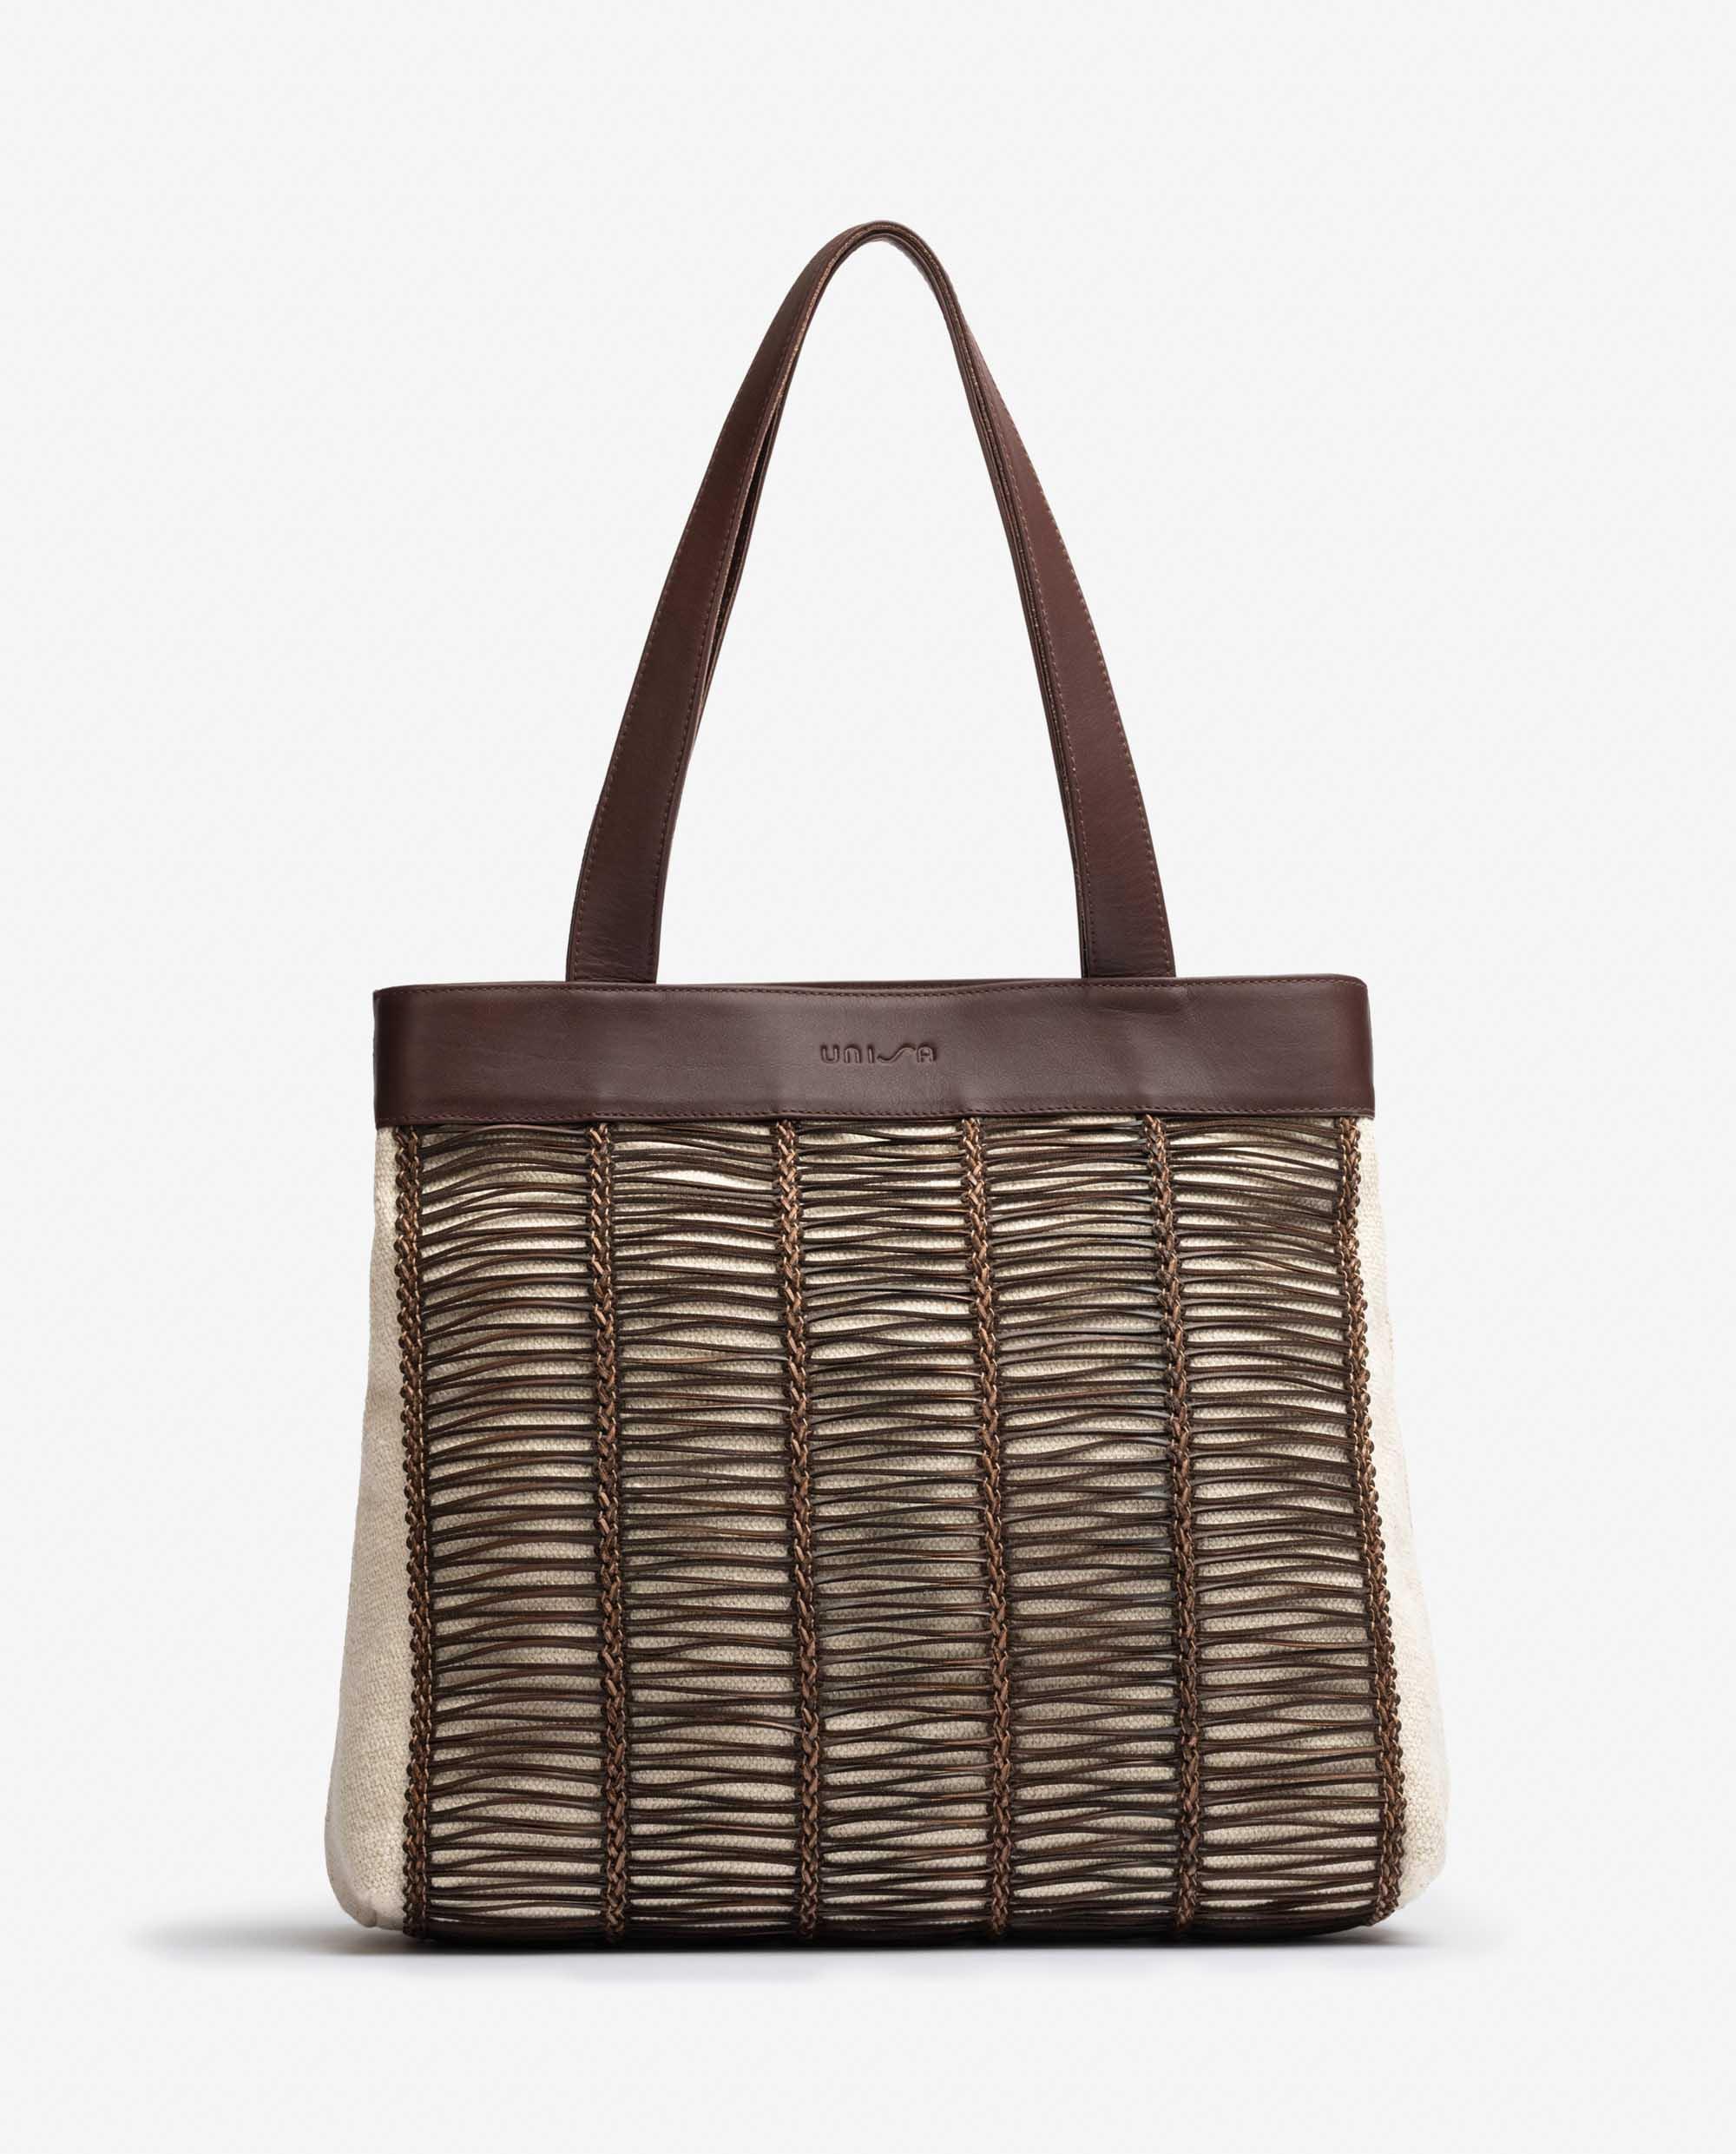 UNISA Large handbag made in fabric and leather ZNAELA_NT Bronce 2